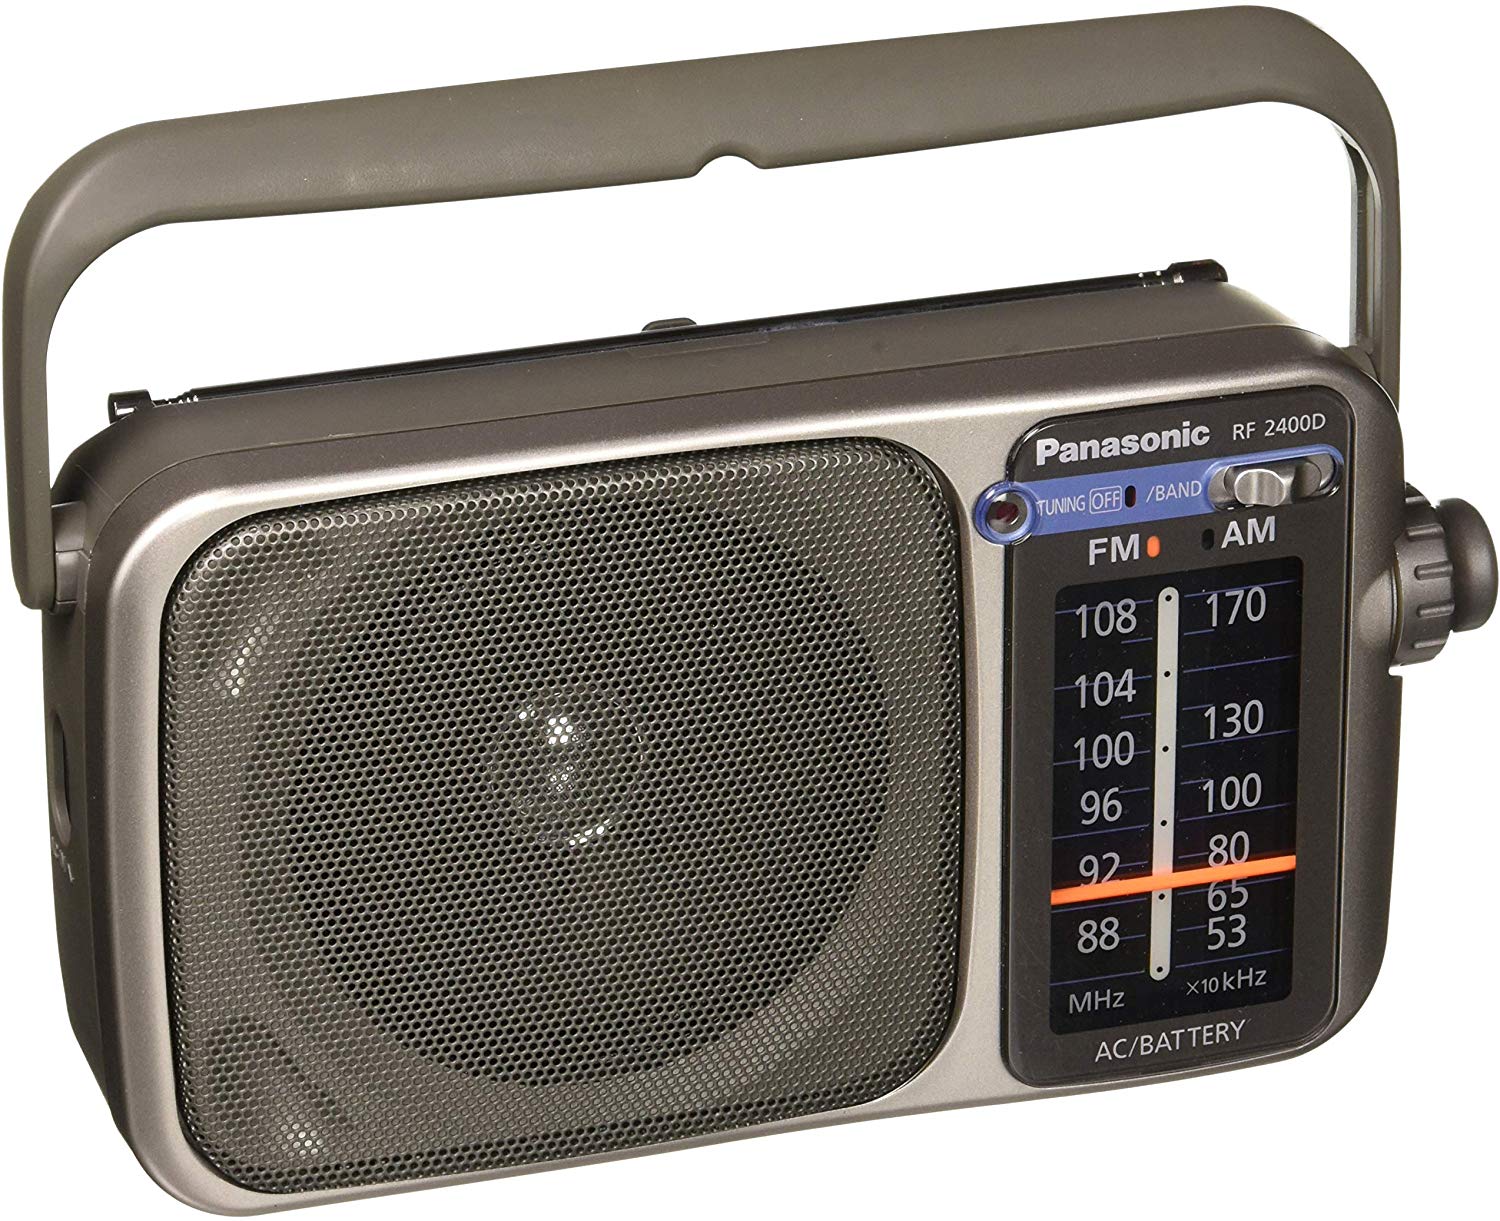 Panasonic RF-2400D AM / FM Radio